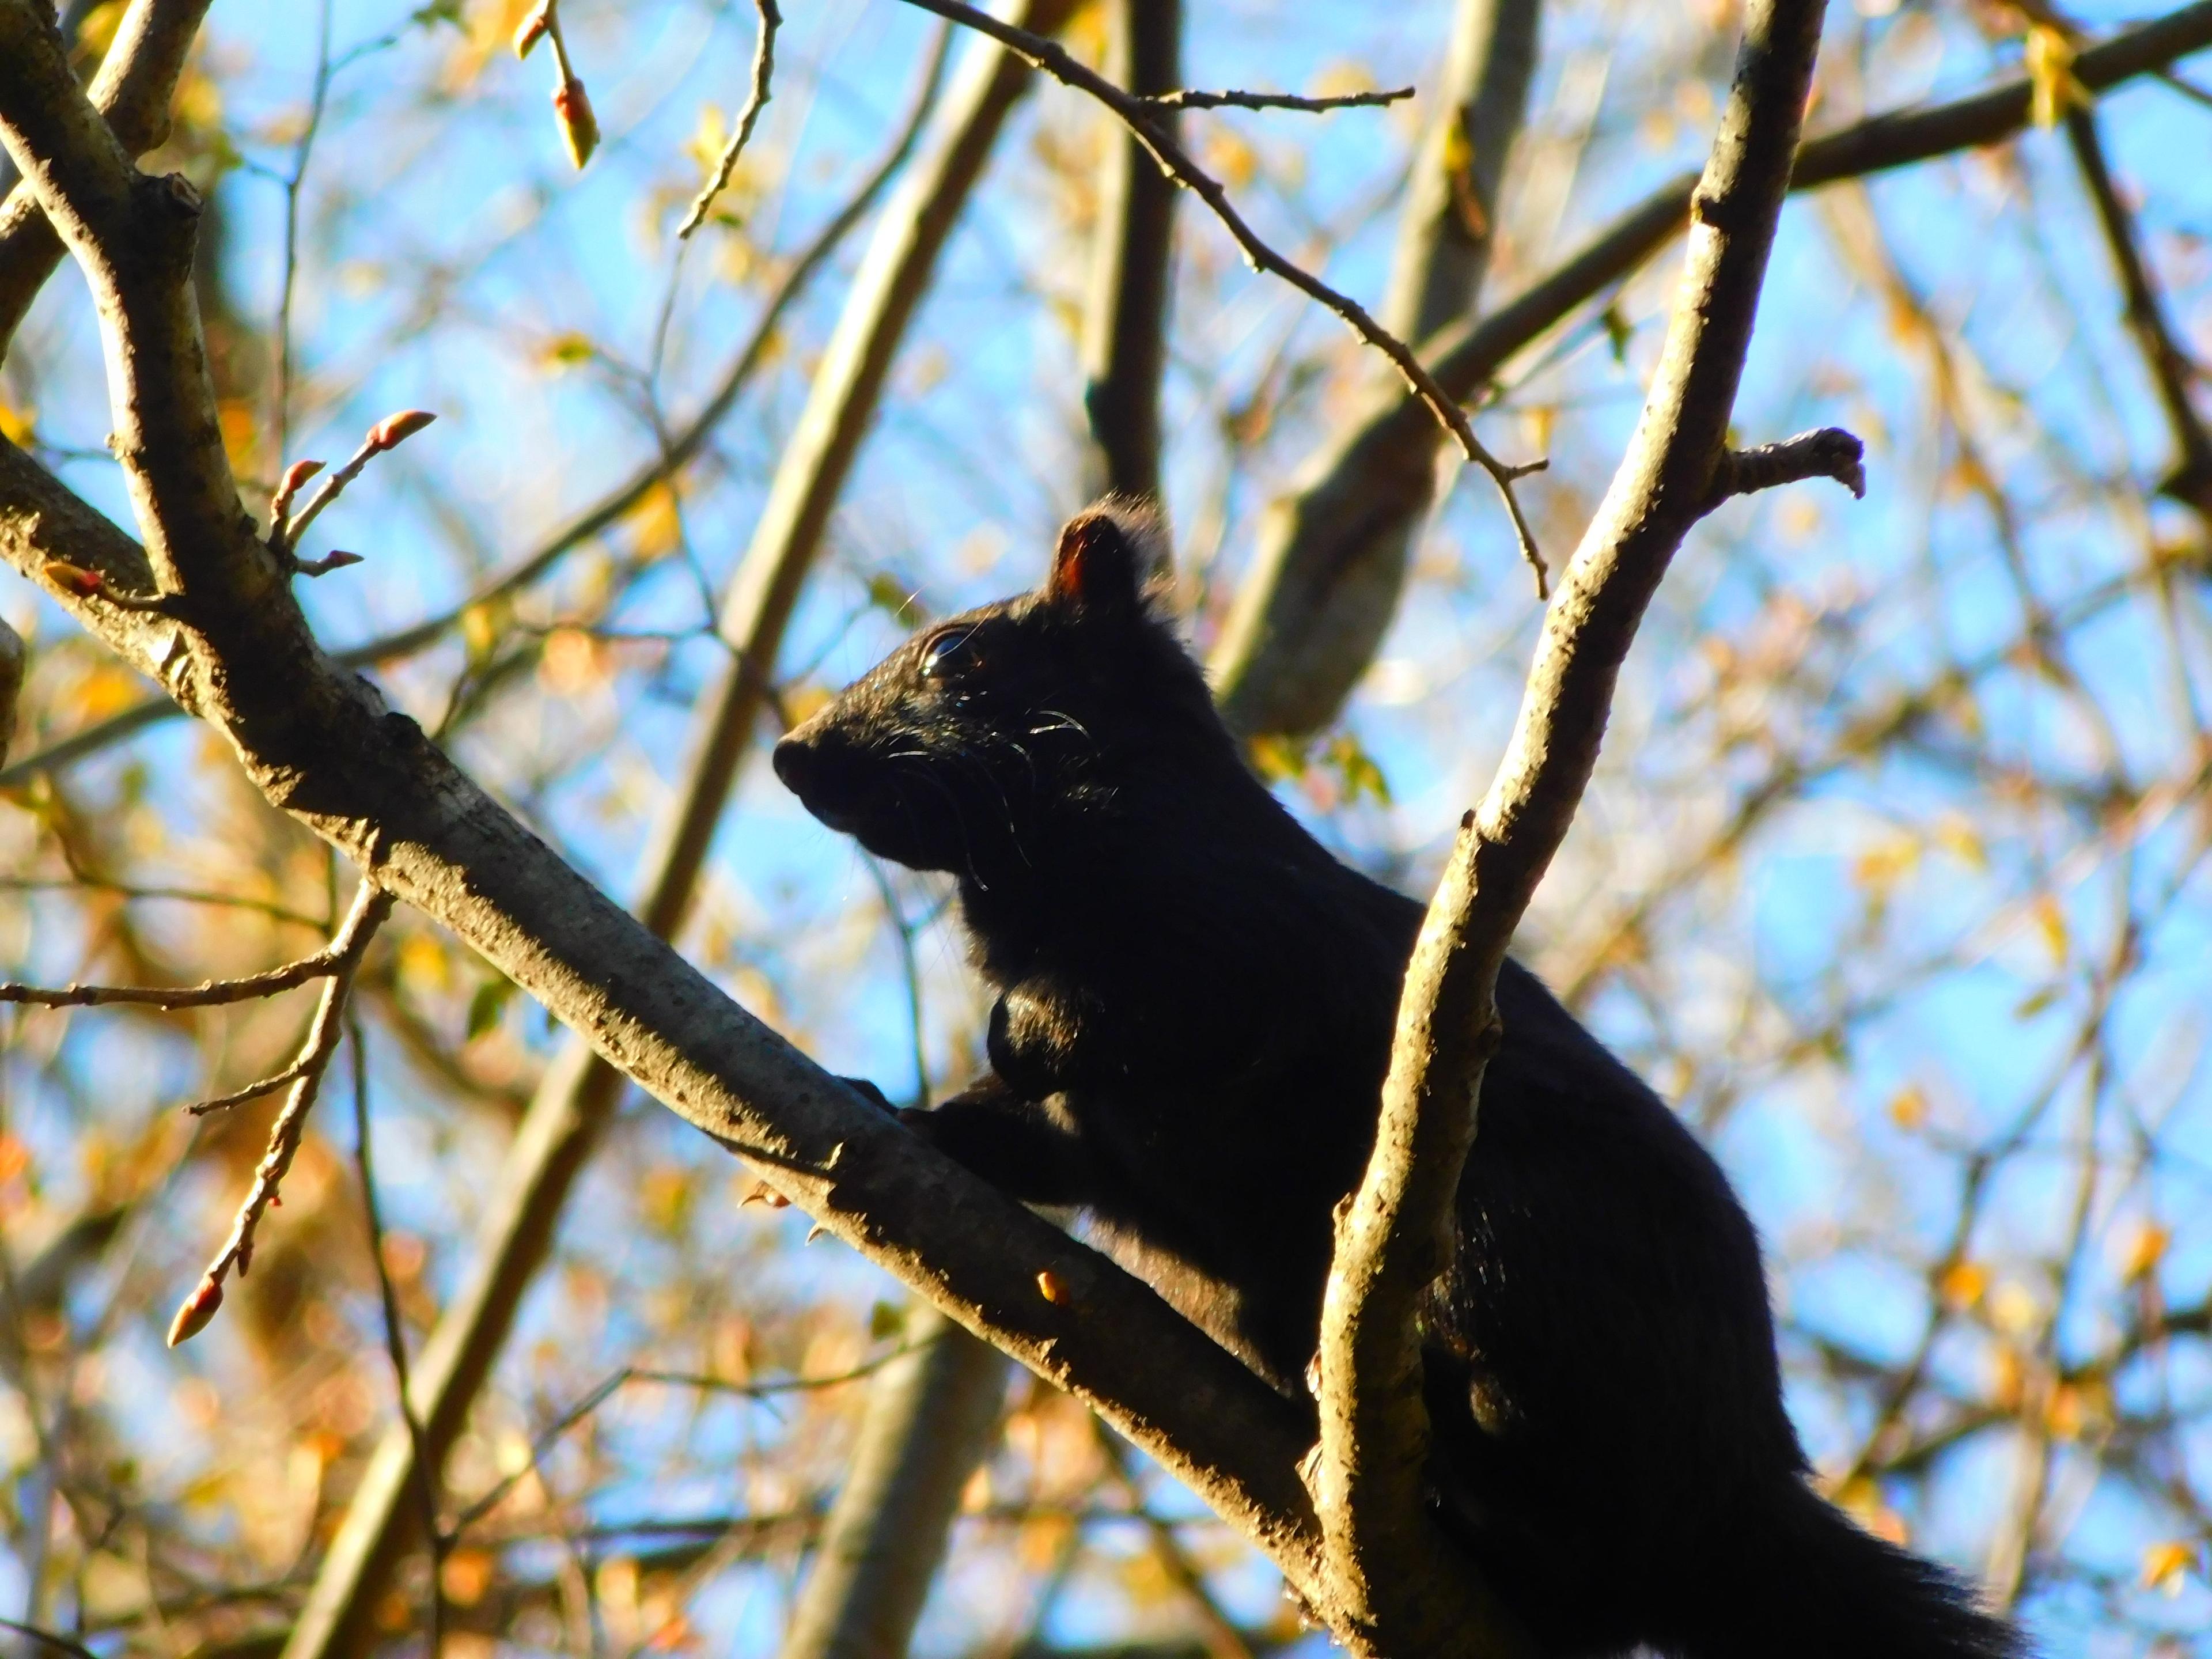 Black squirrel climbs tree in sunlight